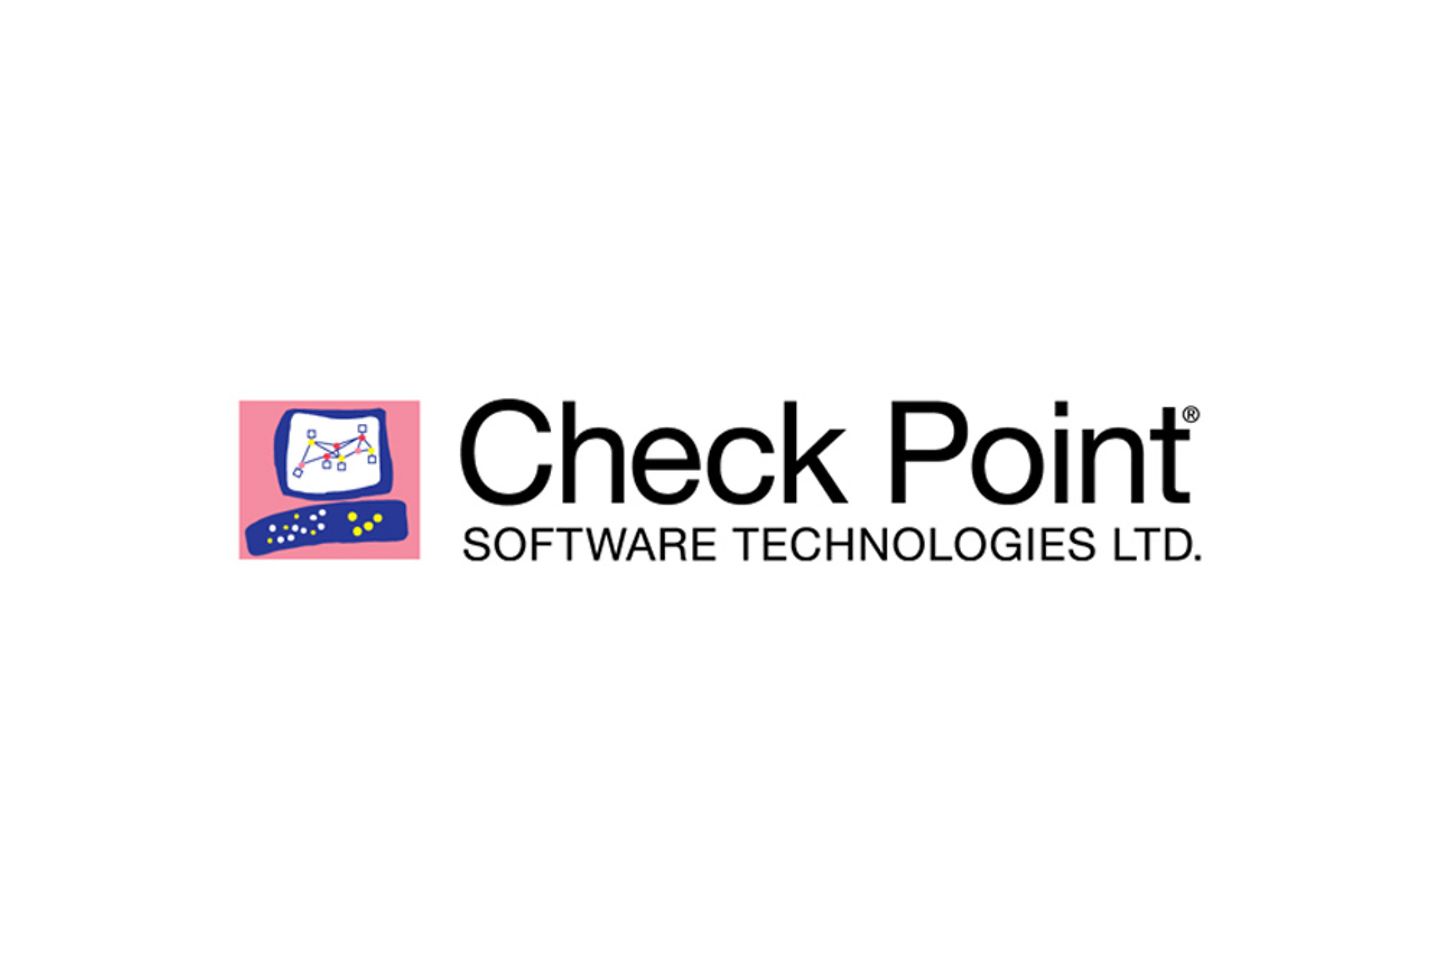 Checkpoint Software Technologies logo beneath it